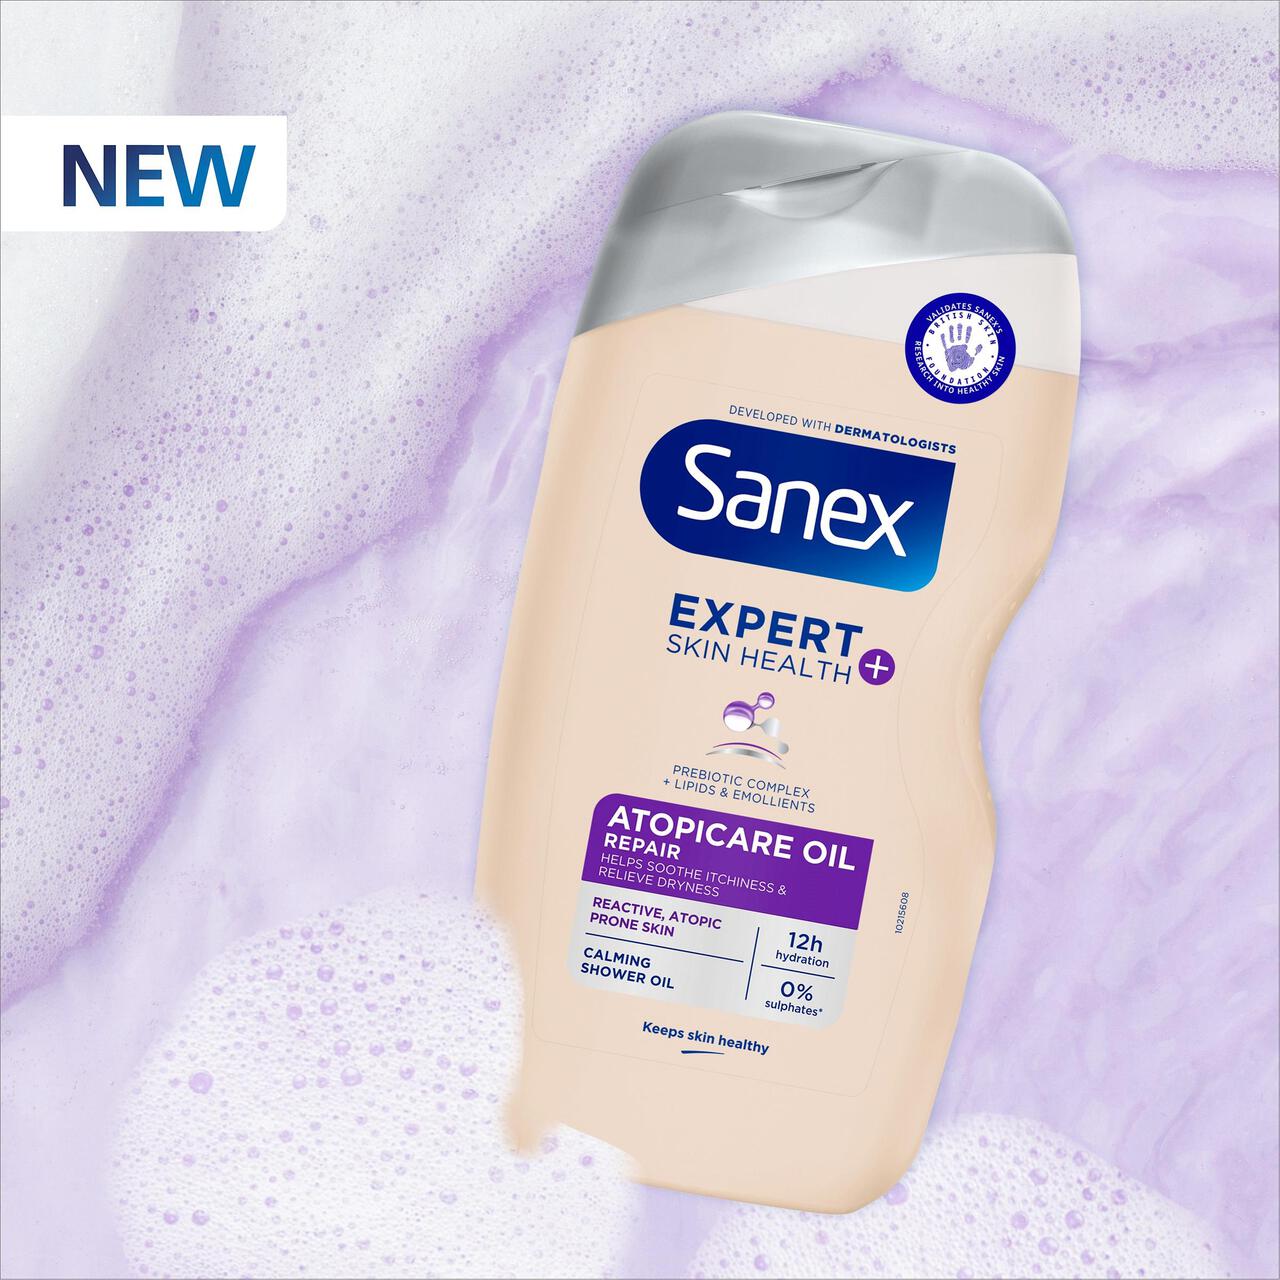 Sanex Expert+ Atopicare Oil Repair Shower Gel 515ml